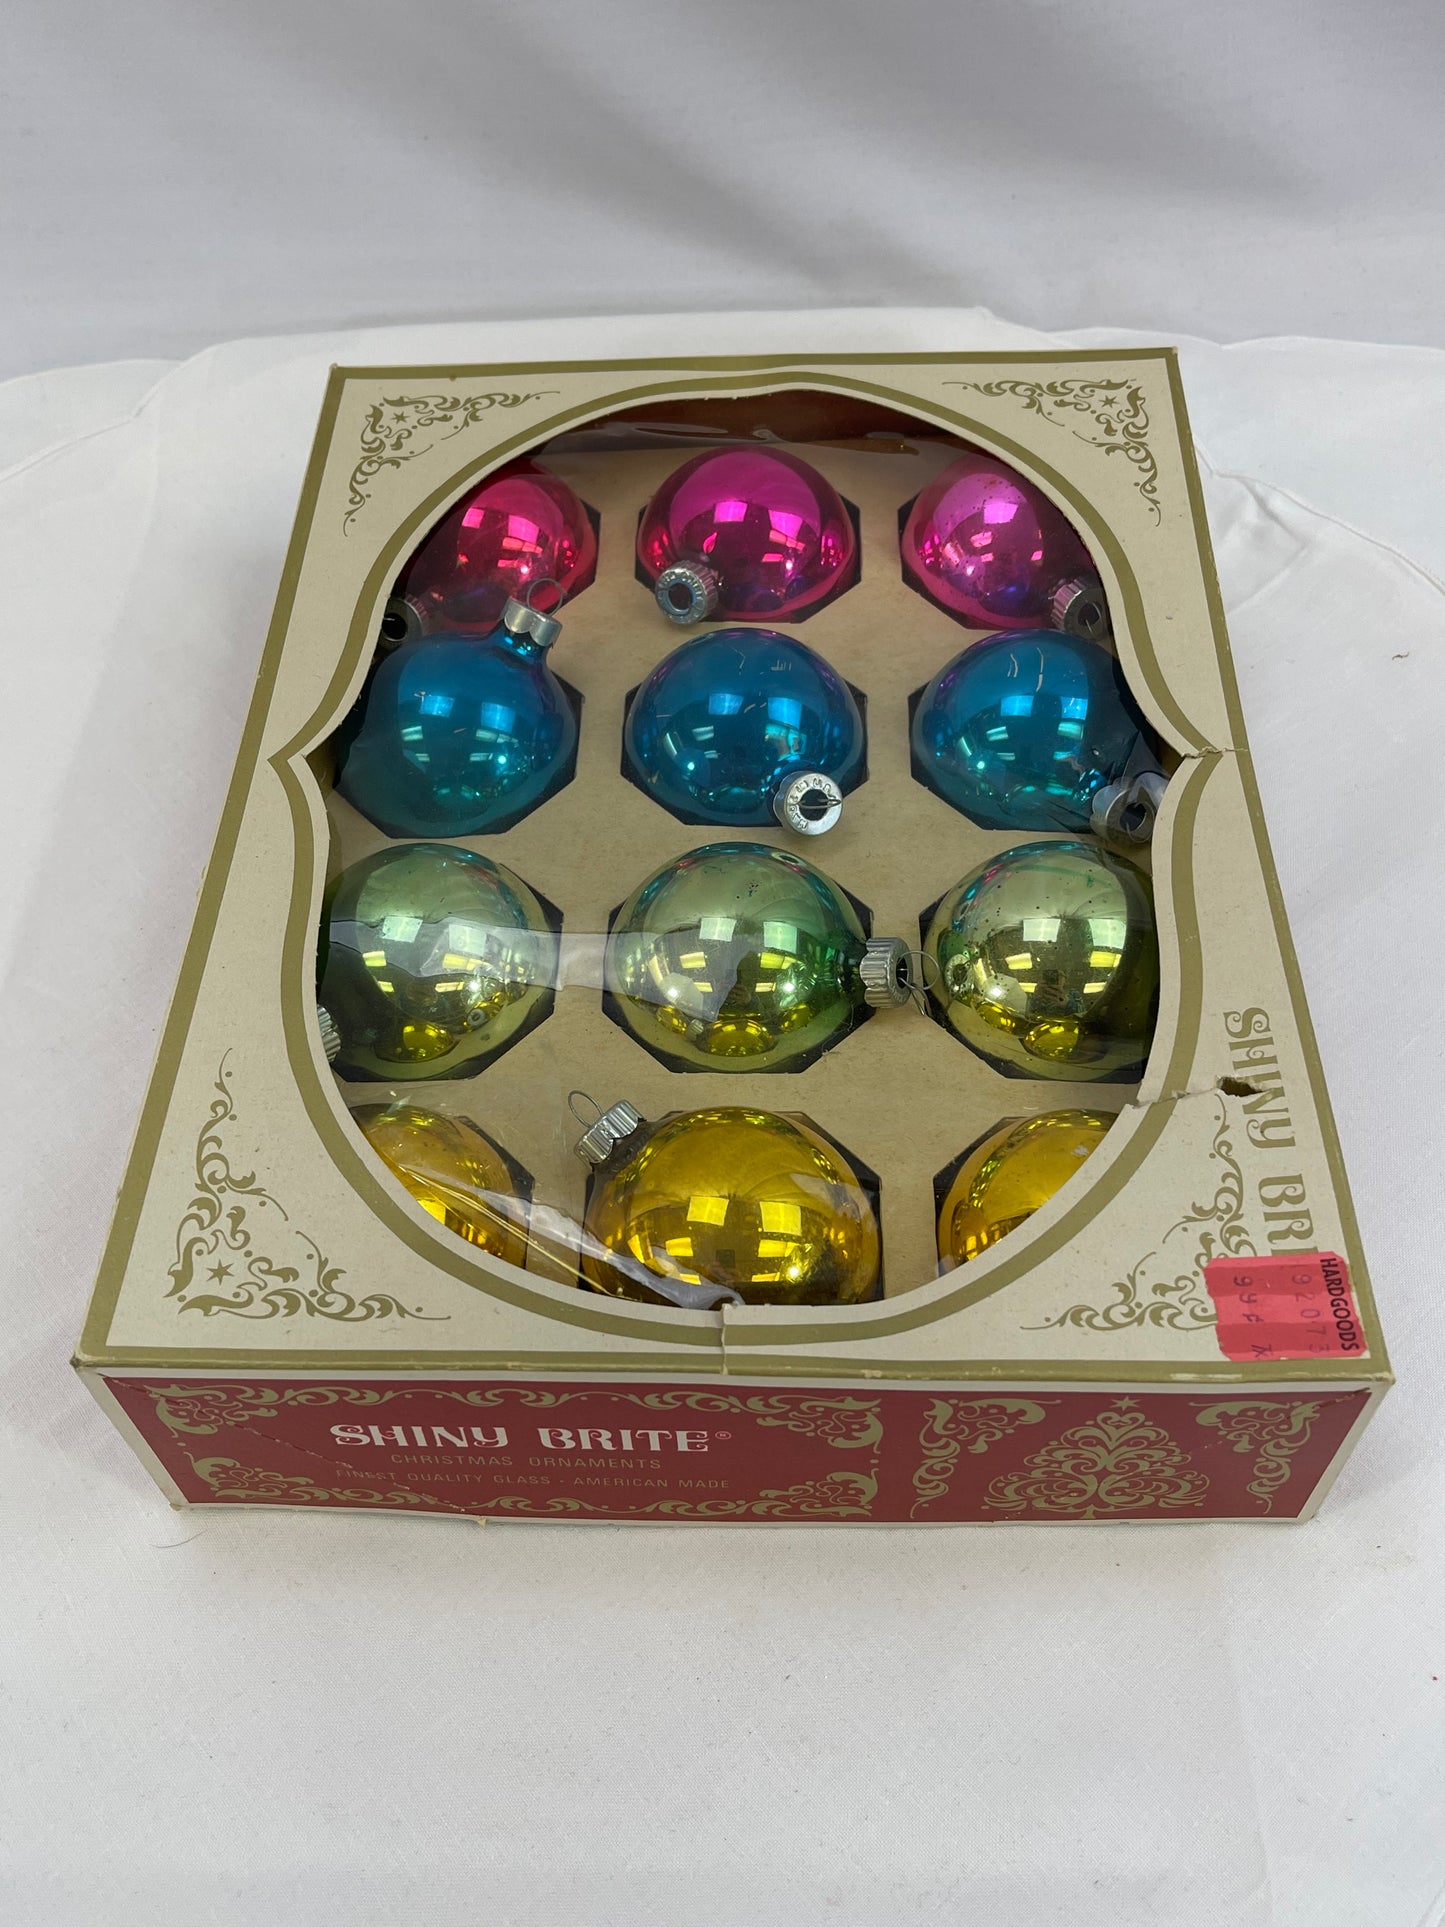 Vintage Glass Ornaments - mixed colors